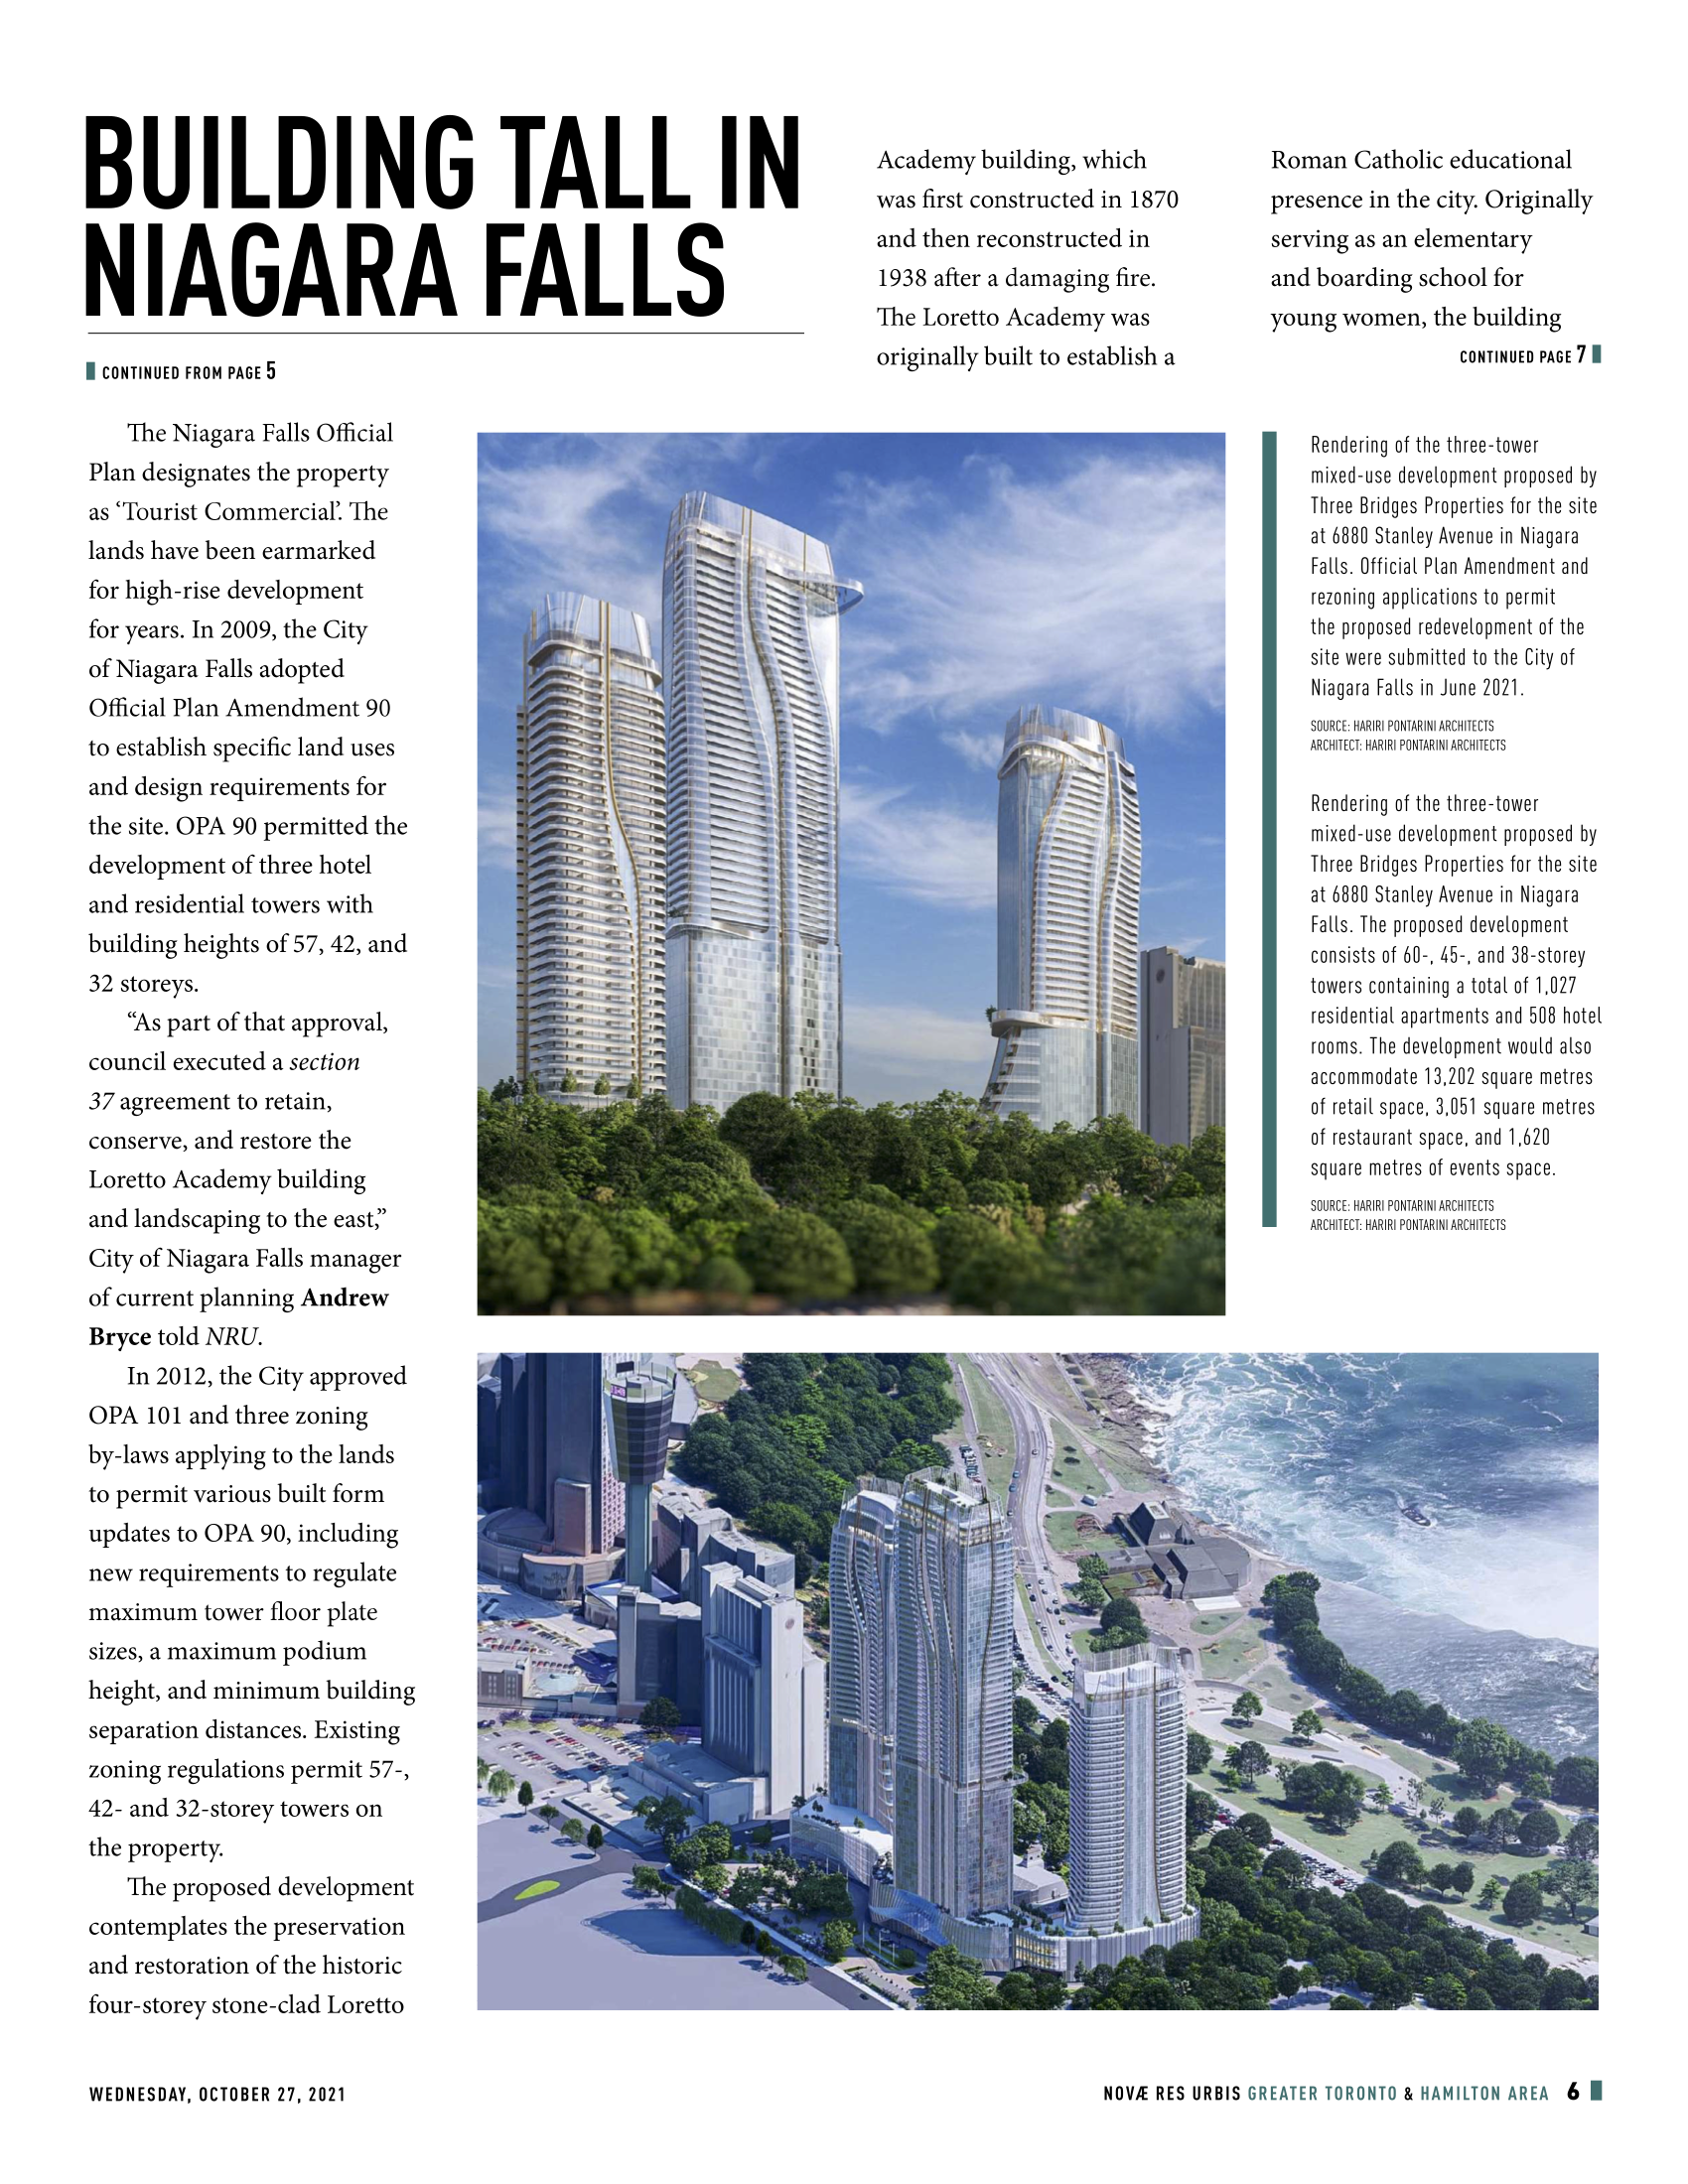 Building Tall in Niagara Falls by Marc Mitanis, NRU Publishing Inc (dragged) 2